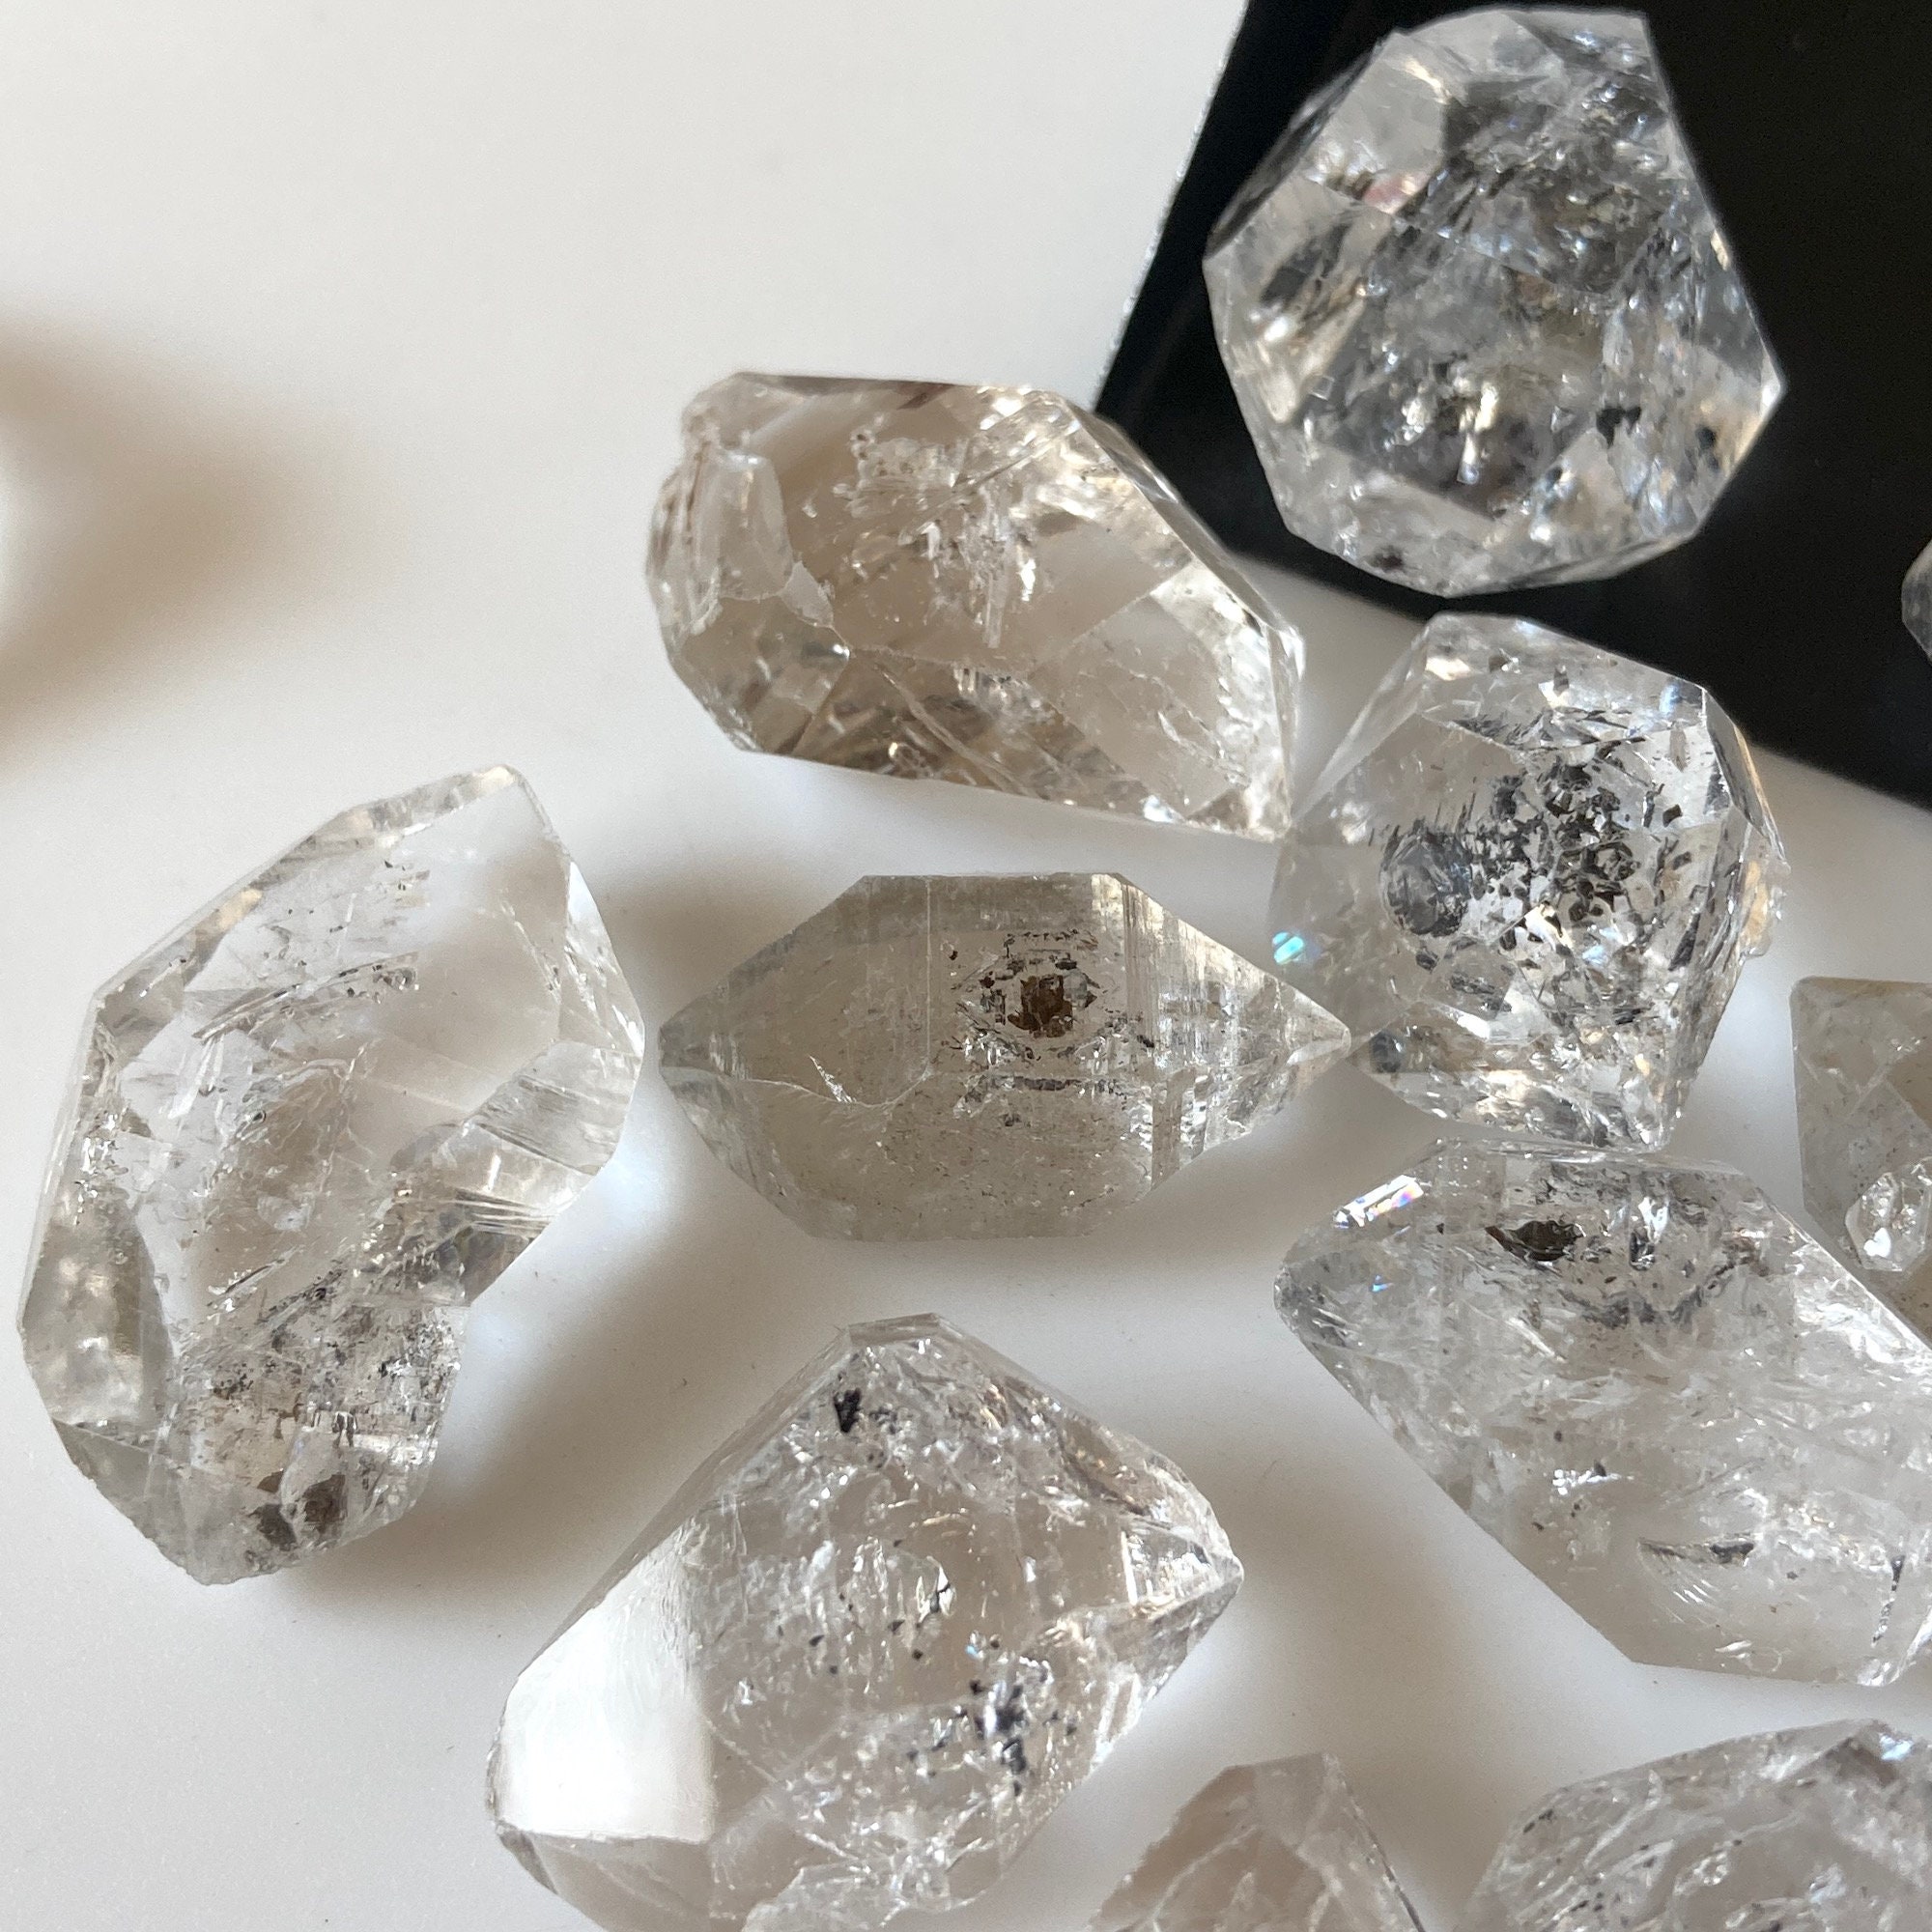 The Properties Of Herkimer Diamonds